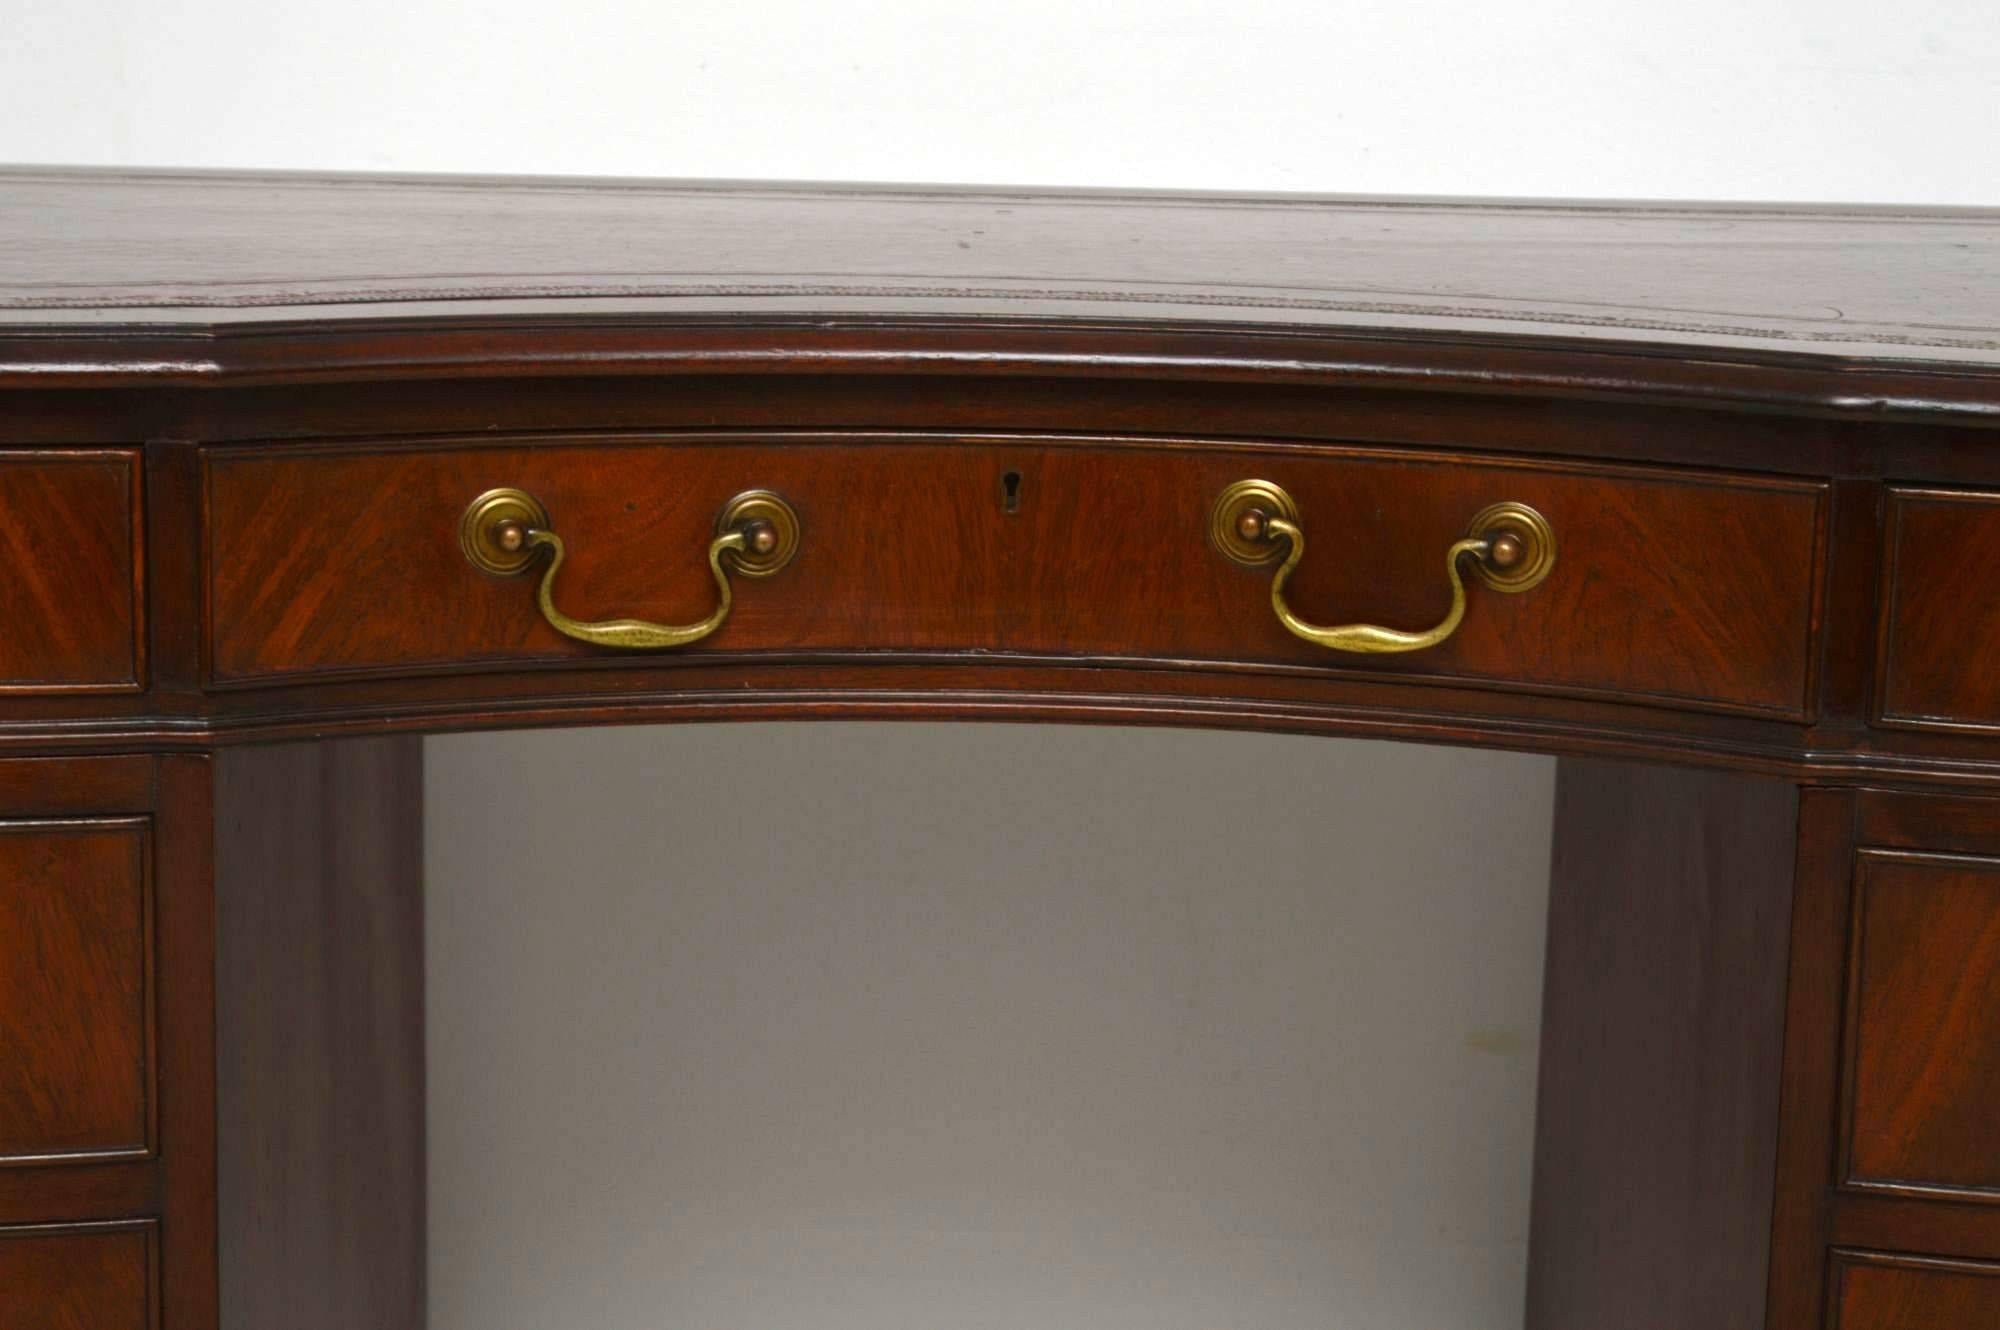 Antique Mahogany Leather Top Pedestal Desk 4